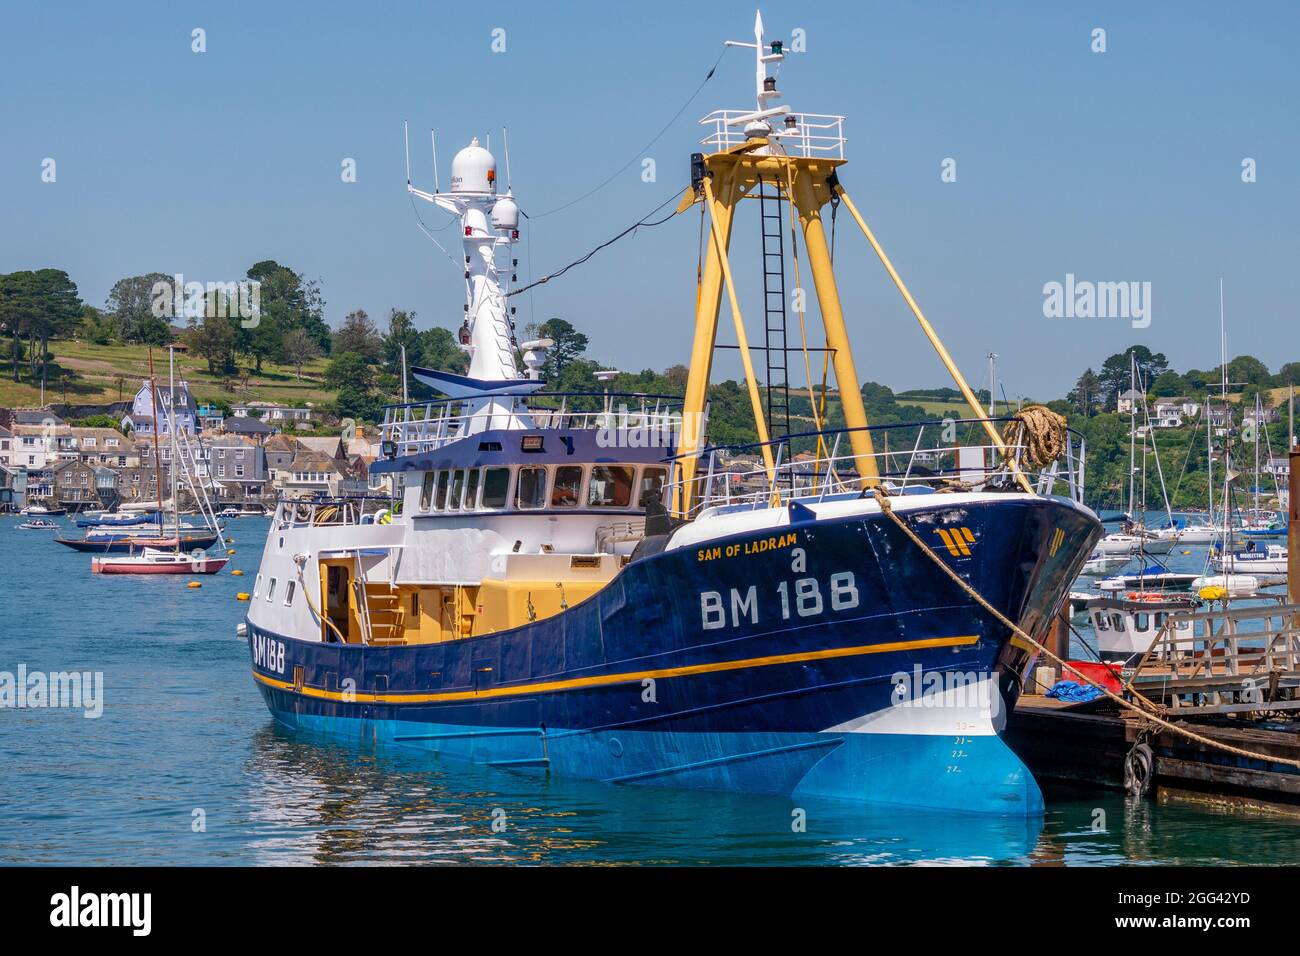 Polruan Quayside with the Trawler 'Sam of Ladram' moored alongside - Polruan, Cornwall, UK. Stock Photo